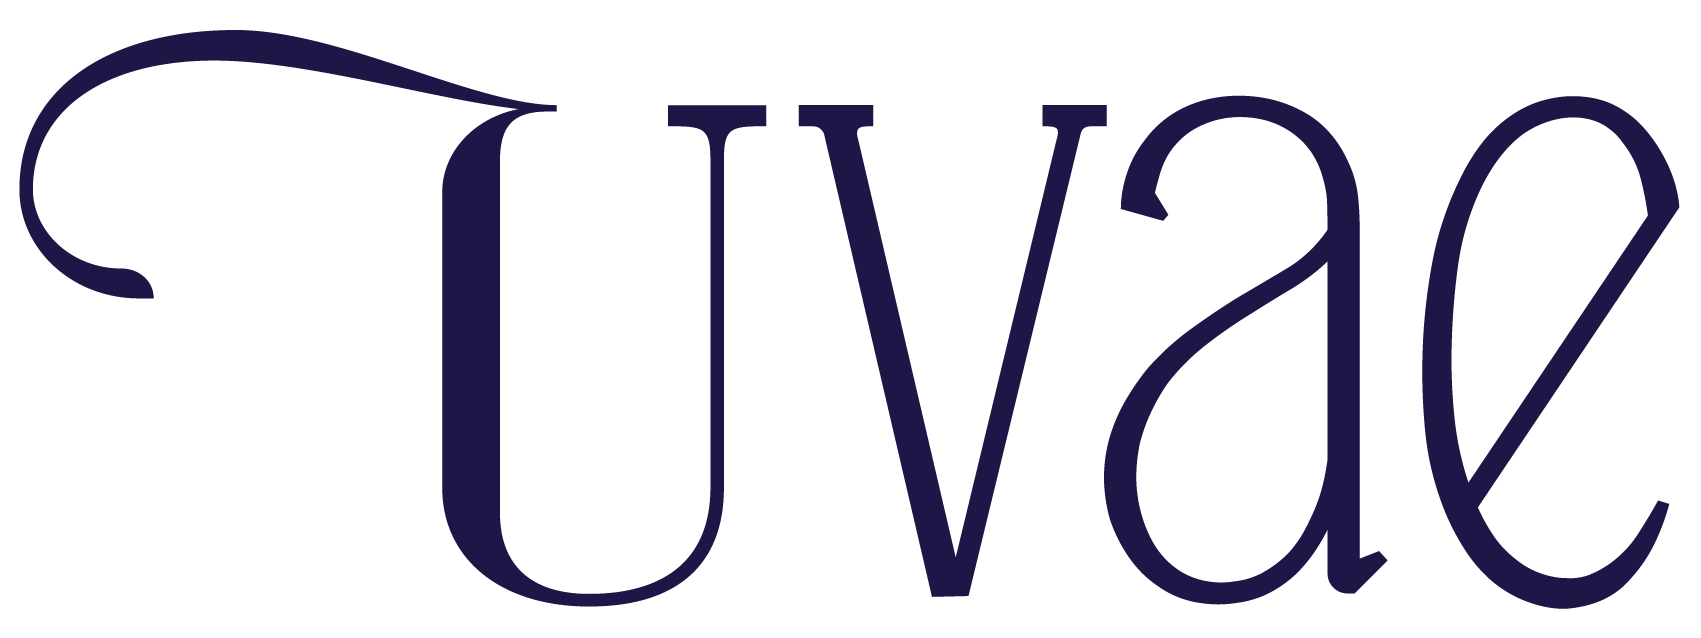 Uvae in dark purple script letters